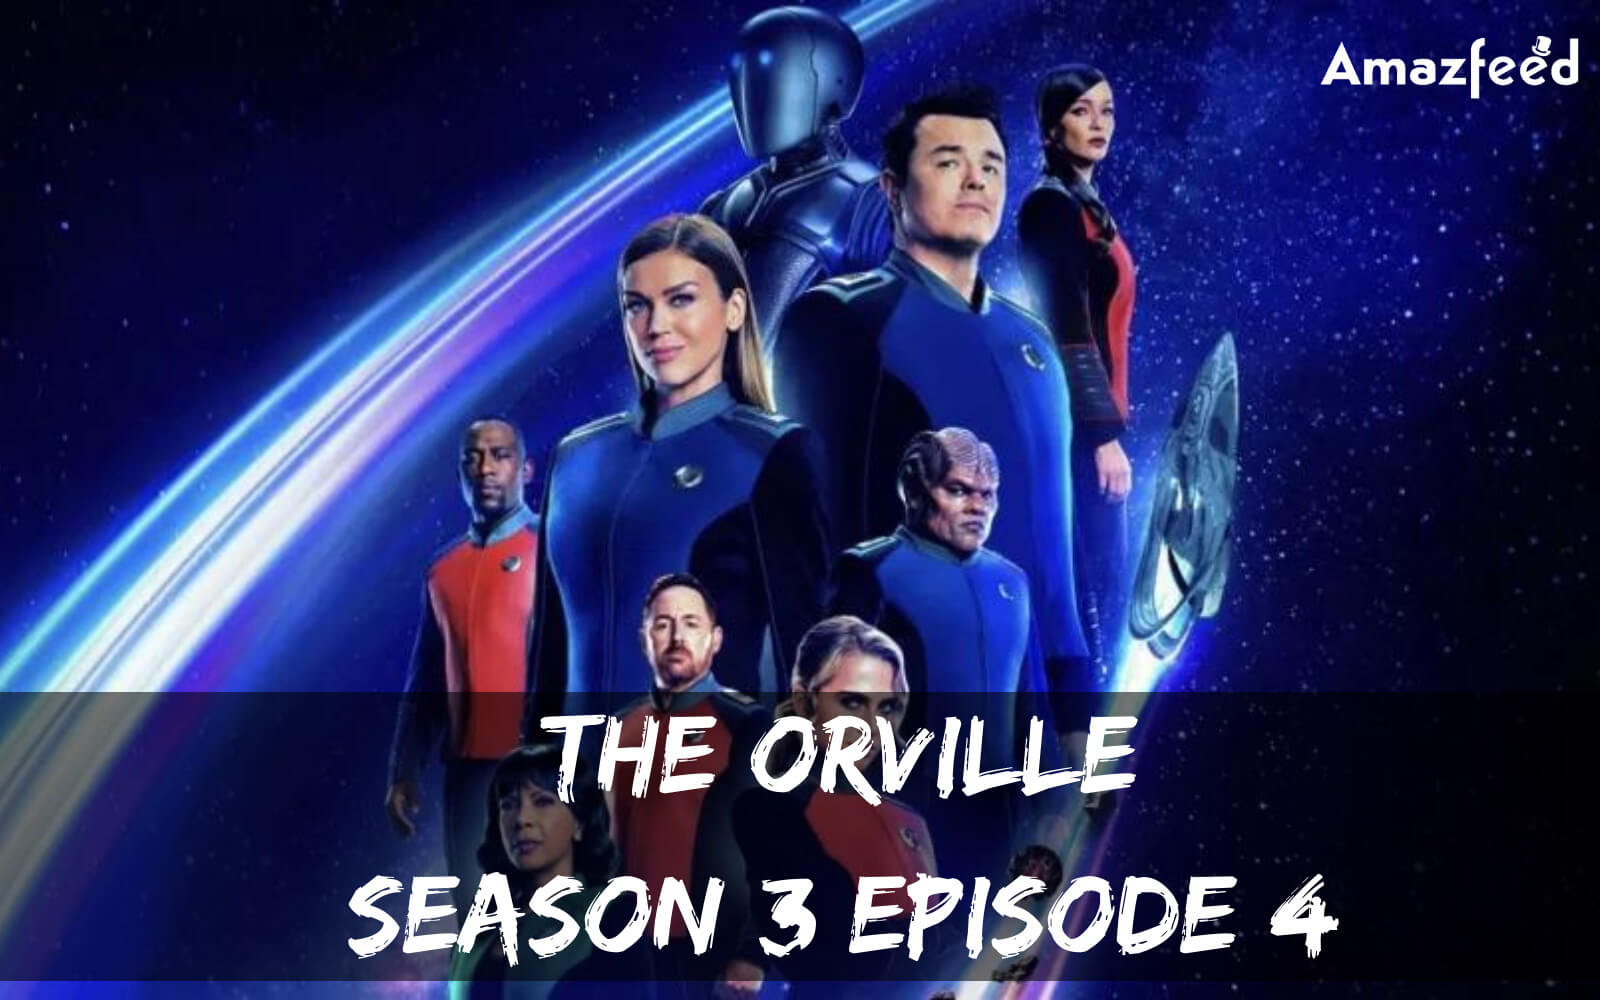 The Orville Season 3 Episode 4 release date